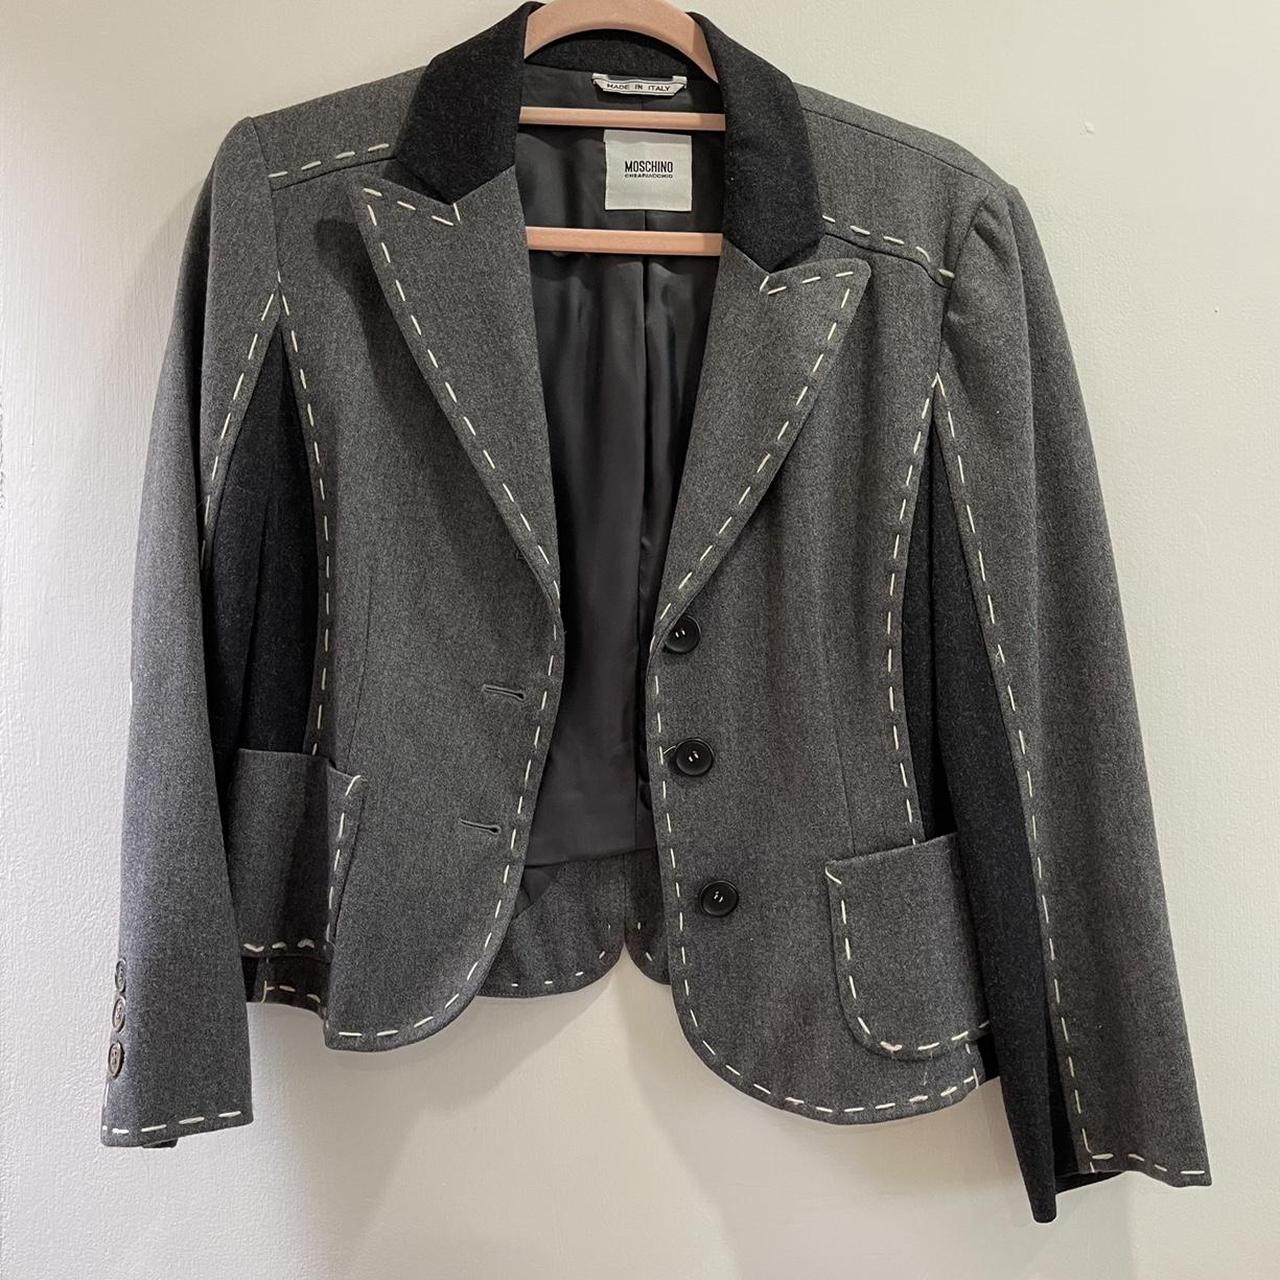 Moschino Cheap & Chic Women's Grey and Black Jacket